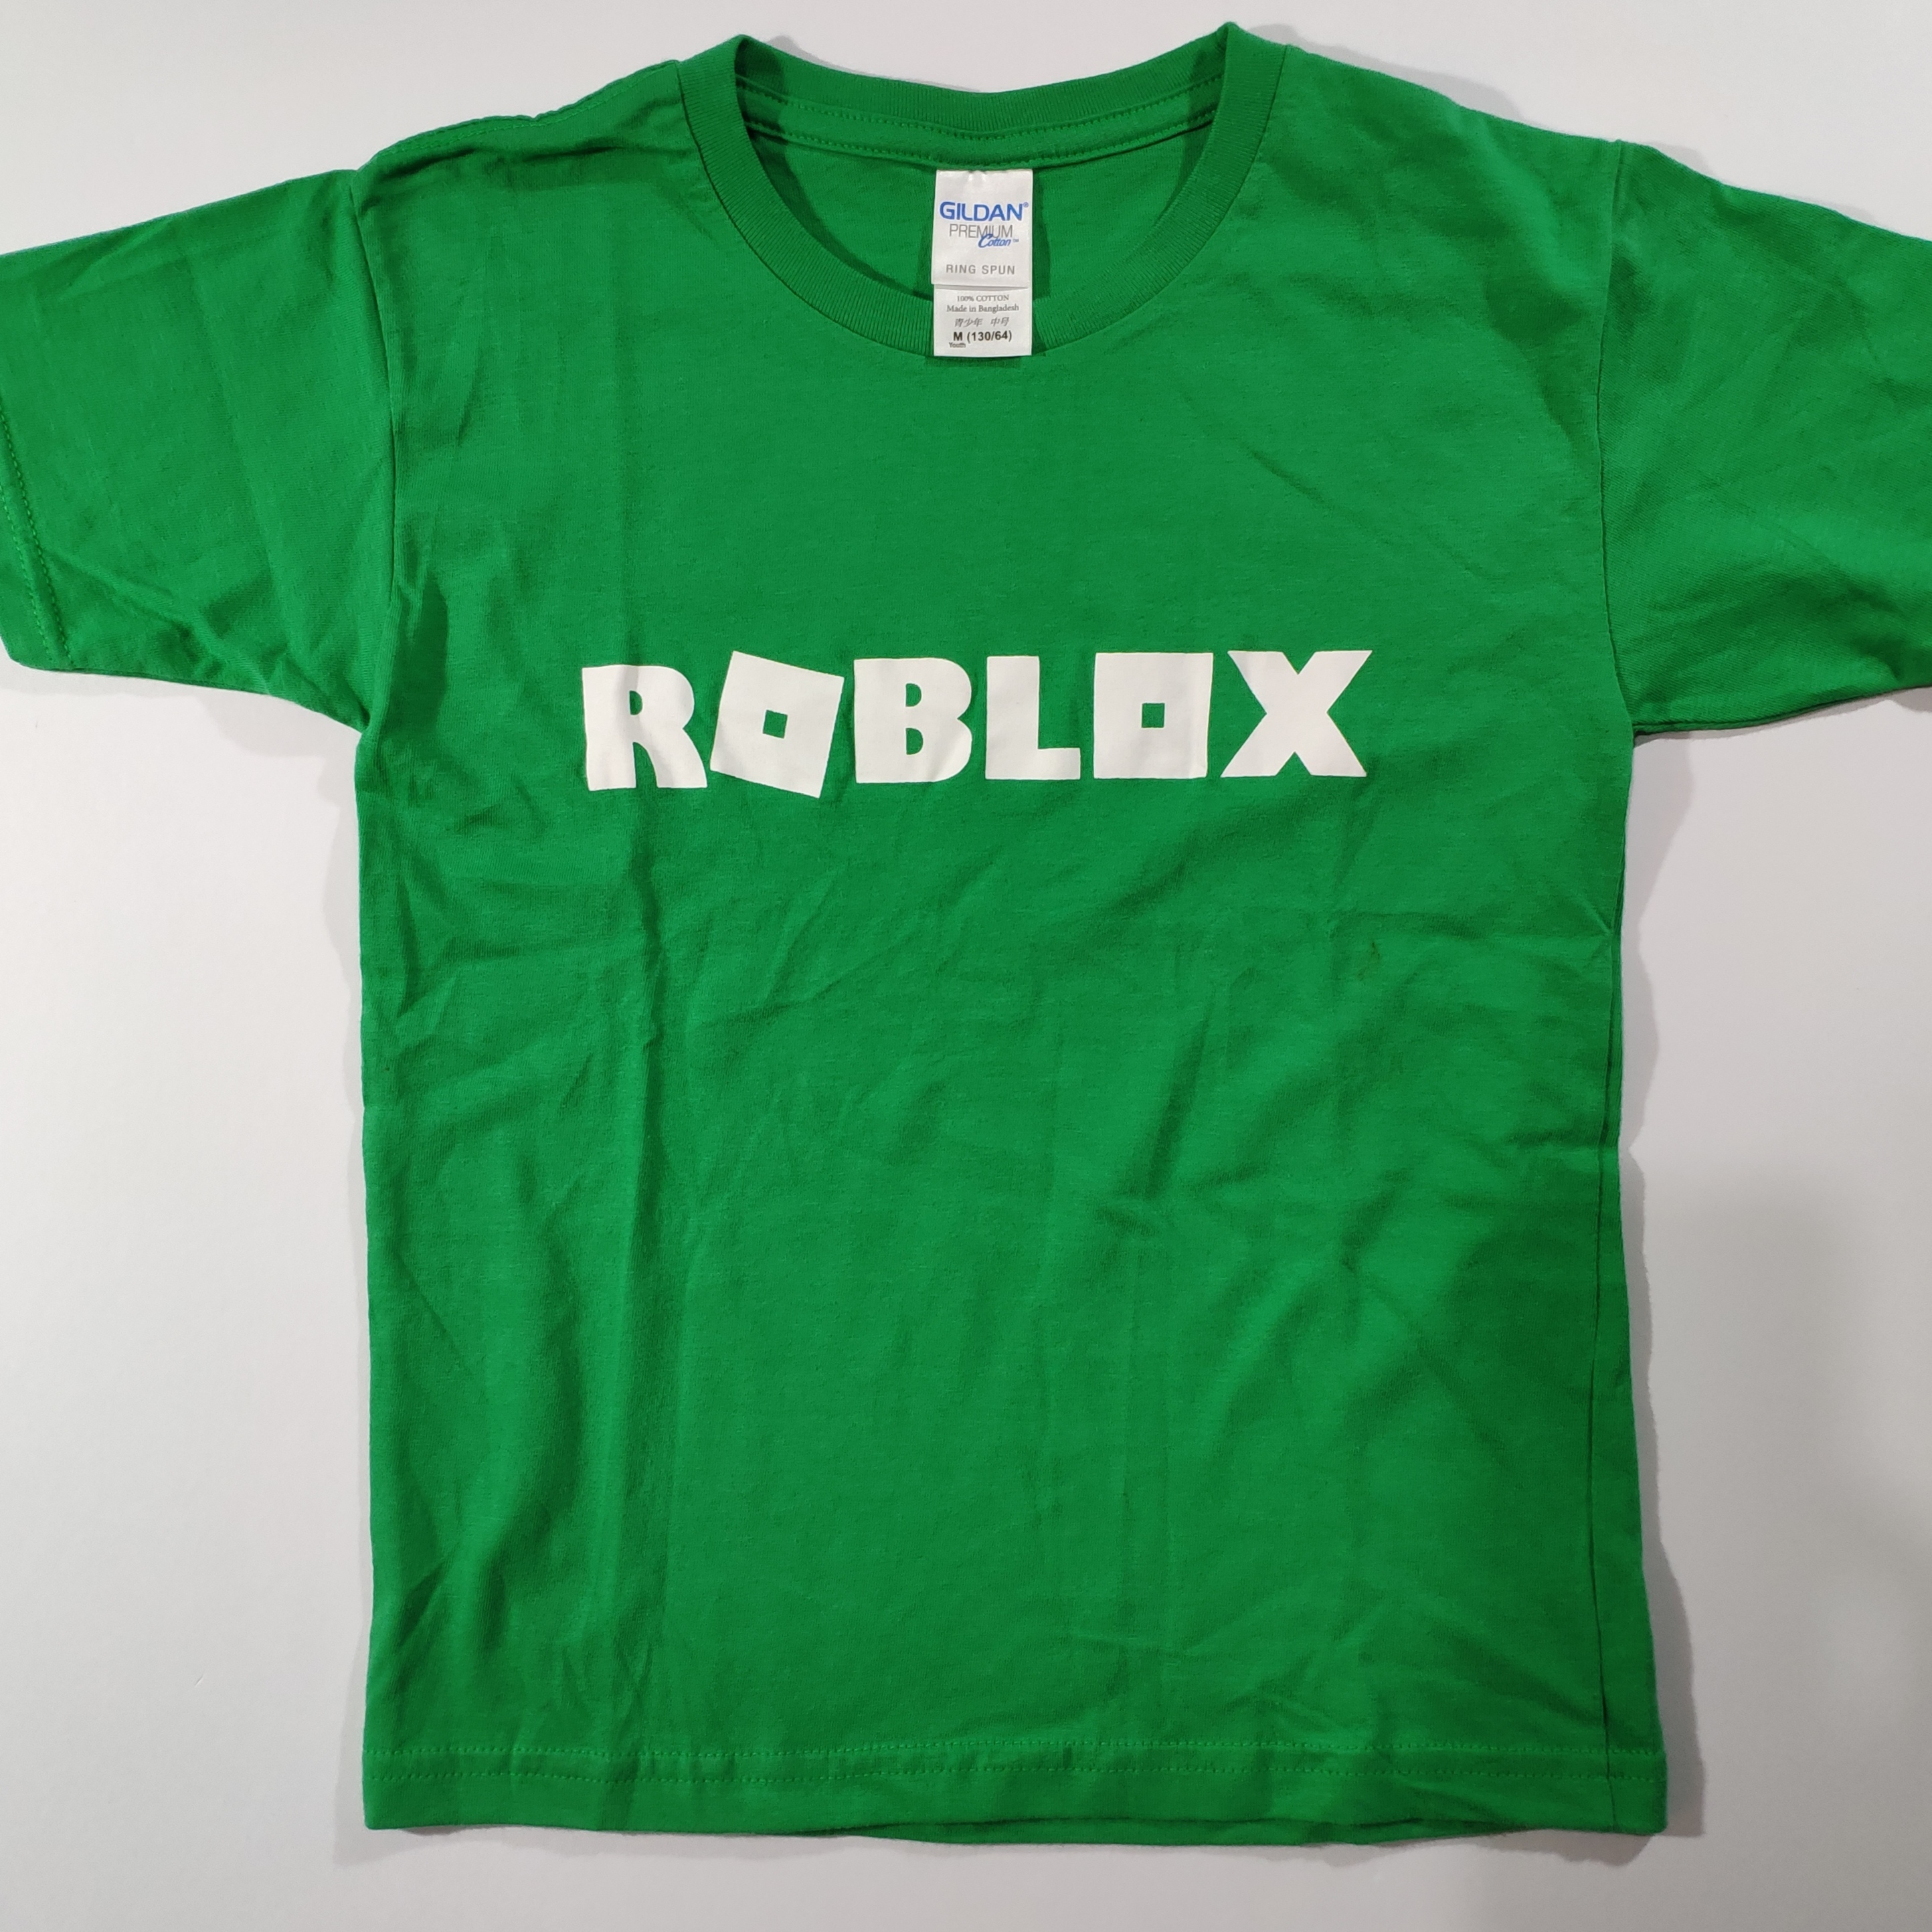 Roblox Kids T Shirt Lazada Ph - roblox breakfash shirt